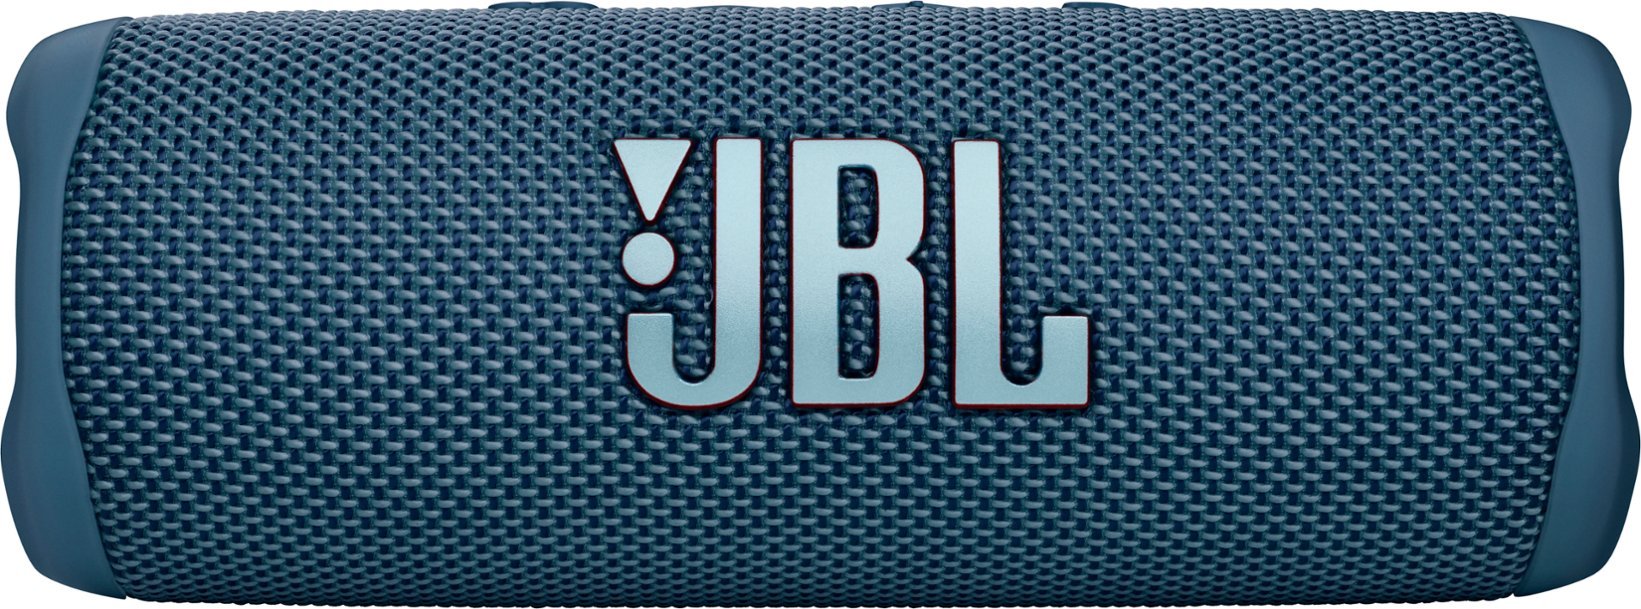 JBL FLIP 6 Portable IP67 Waterproof Wireless Bluetooth Speaker - GT - Blue (Certified Refurbished)